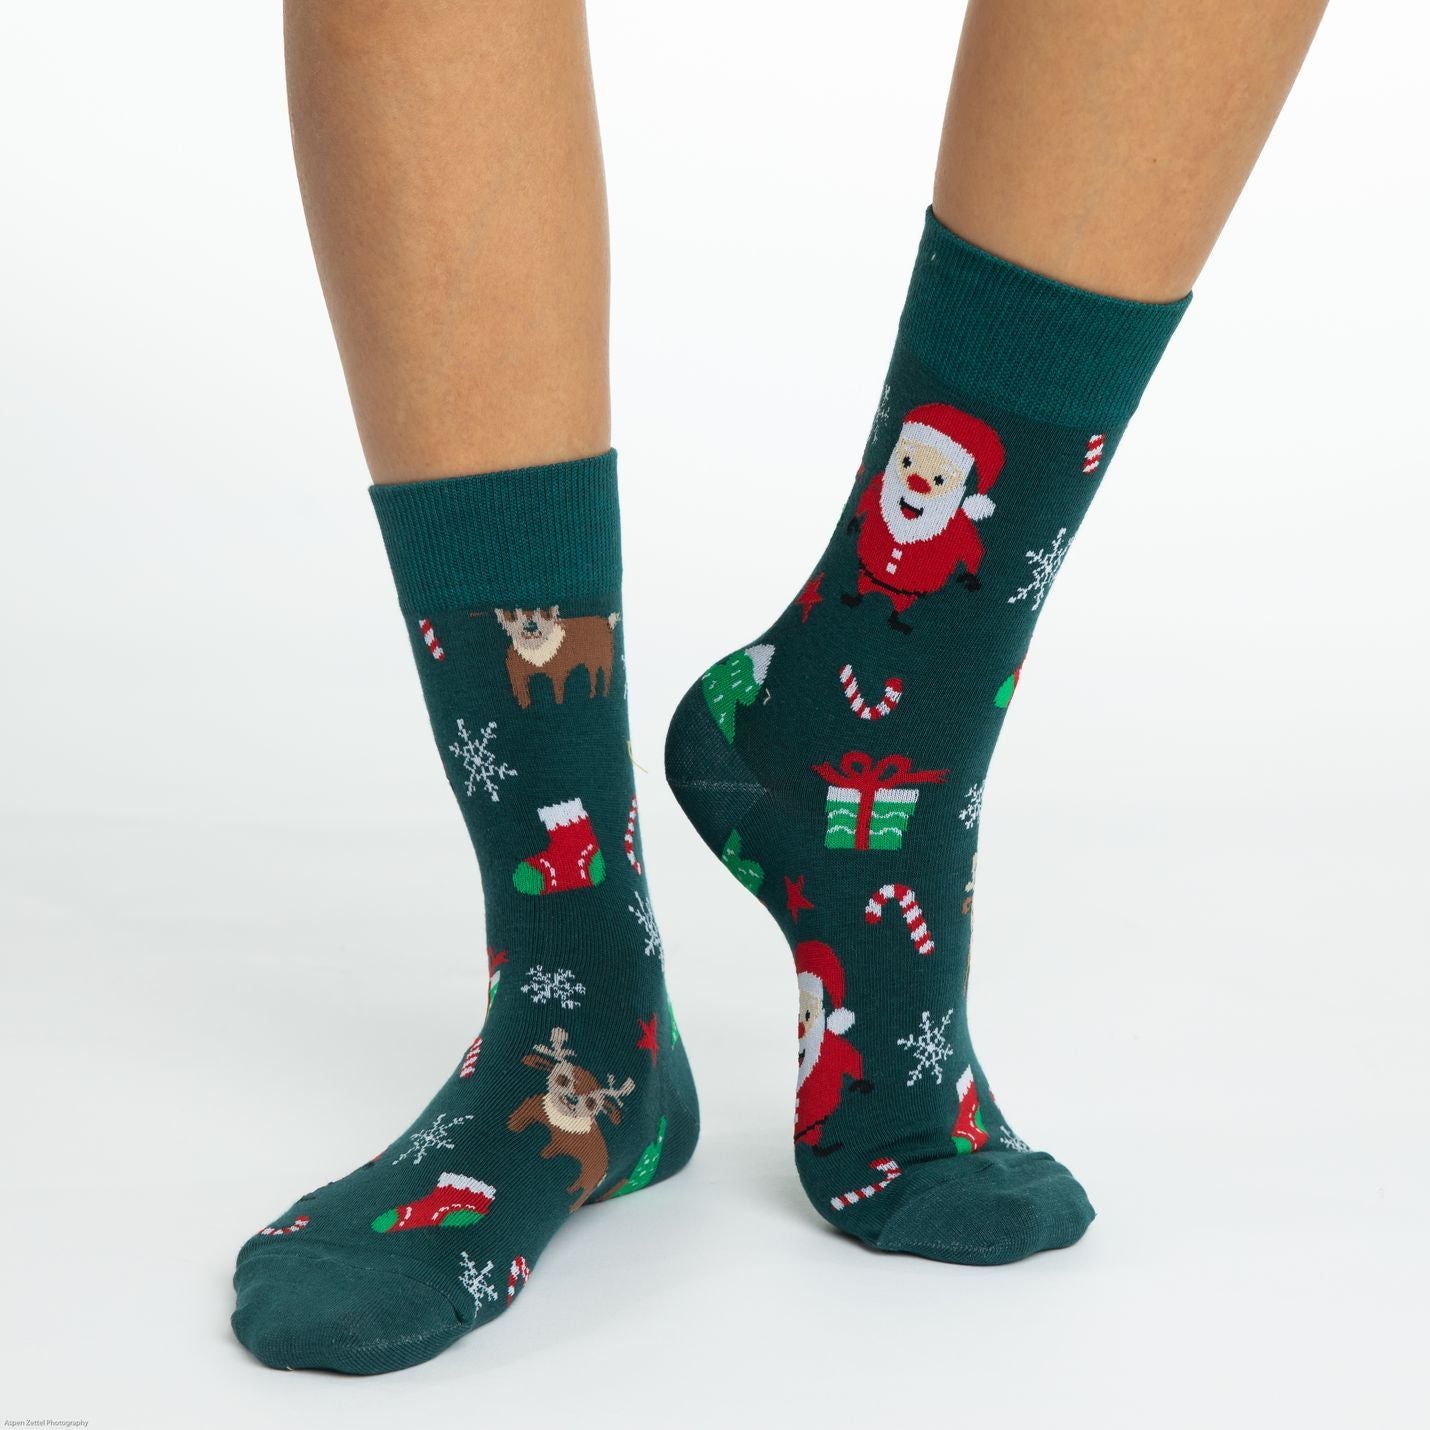 Santa and Rudolph Crew Socks - Women's 5-9